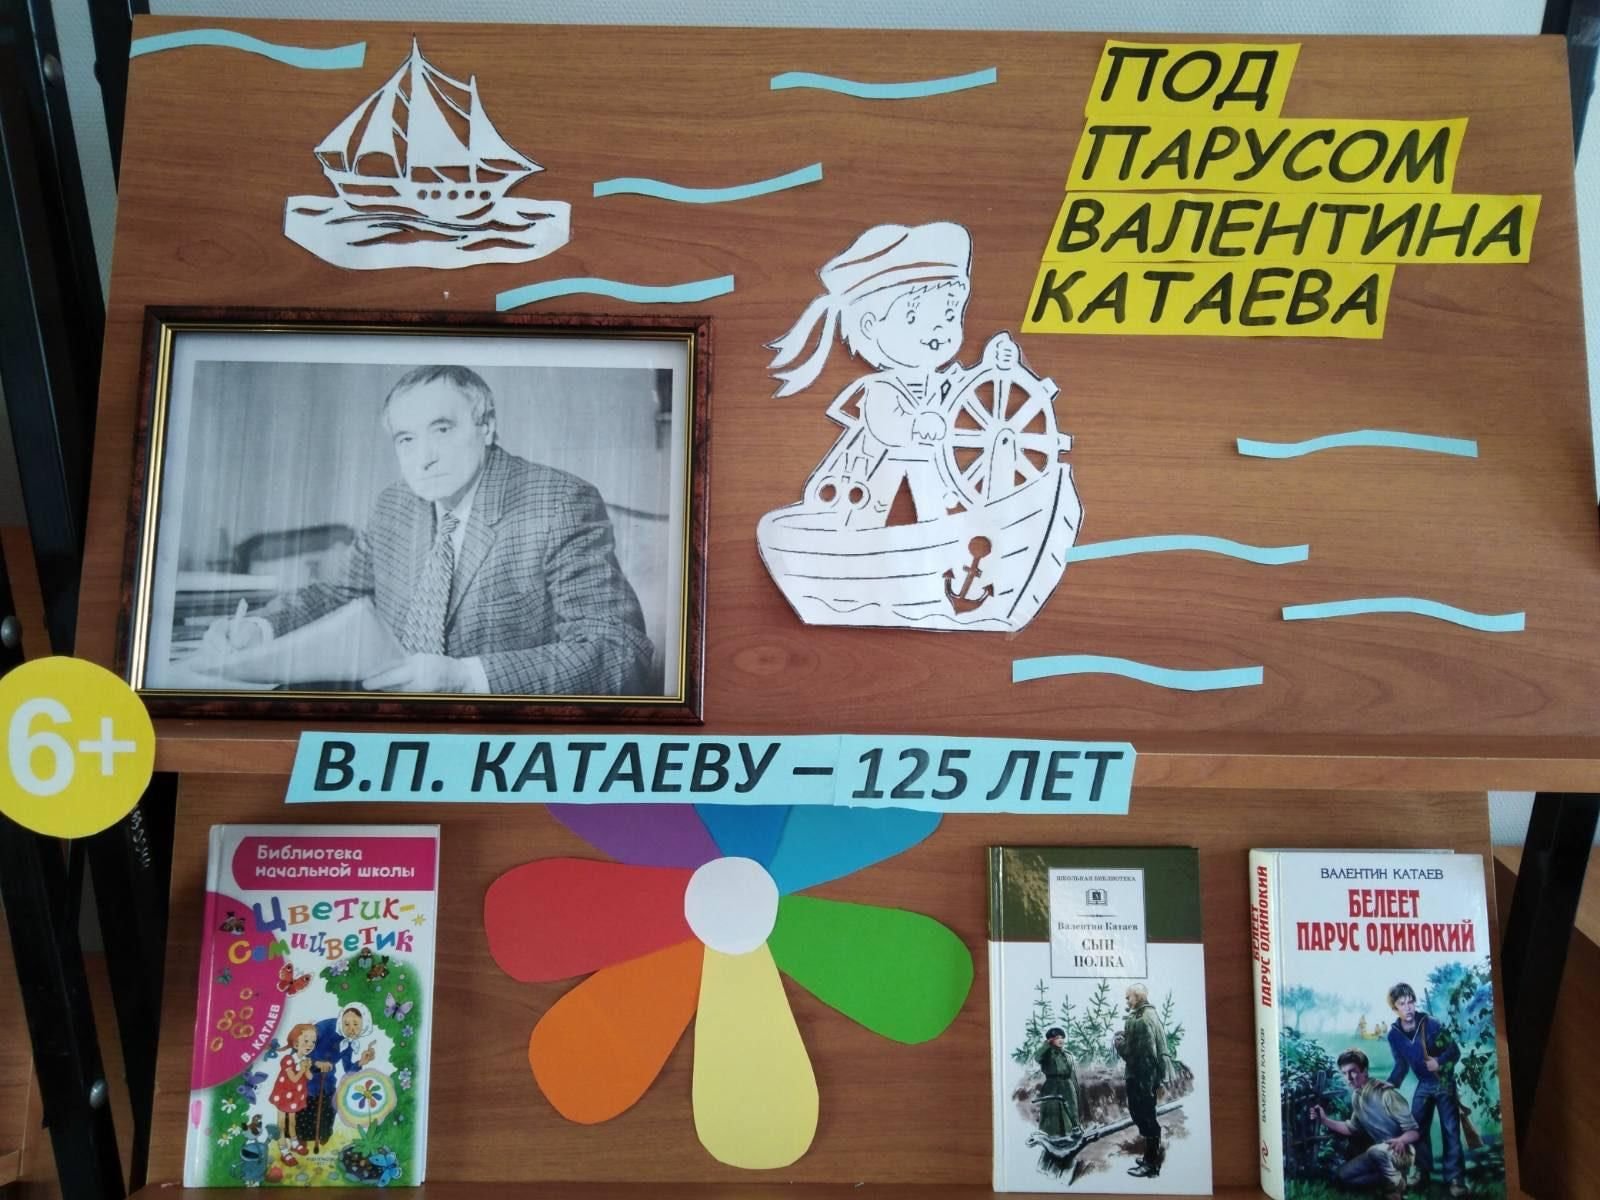 Жизнь и творчество катаева. Мероприятия к юбилею Катаева в библиотеке. Книжная выставка по творчеству Катаева в библиотеке.